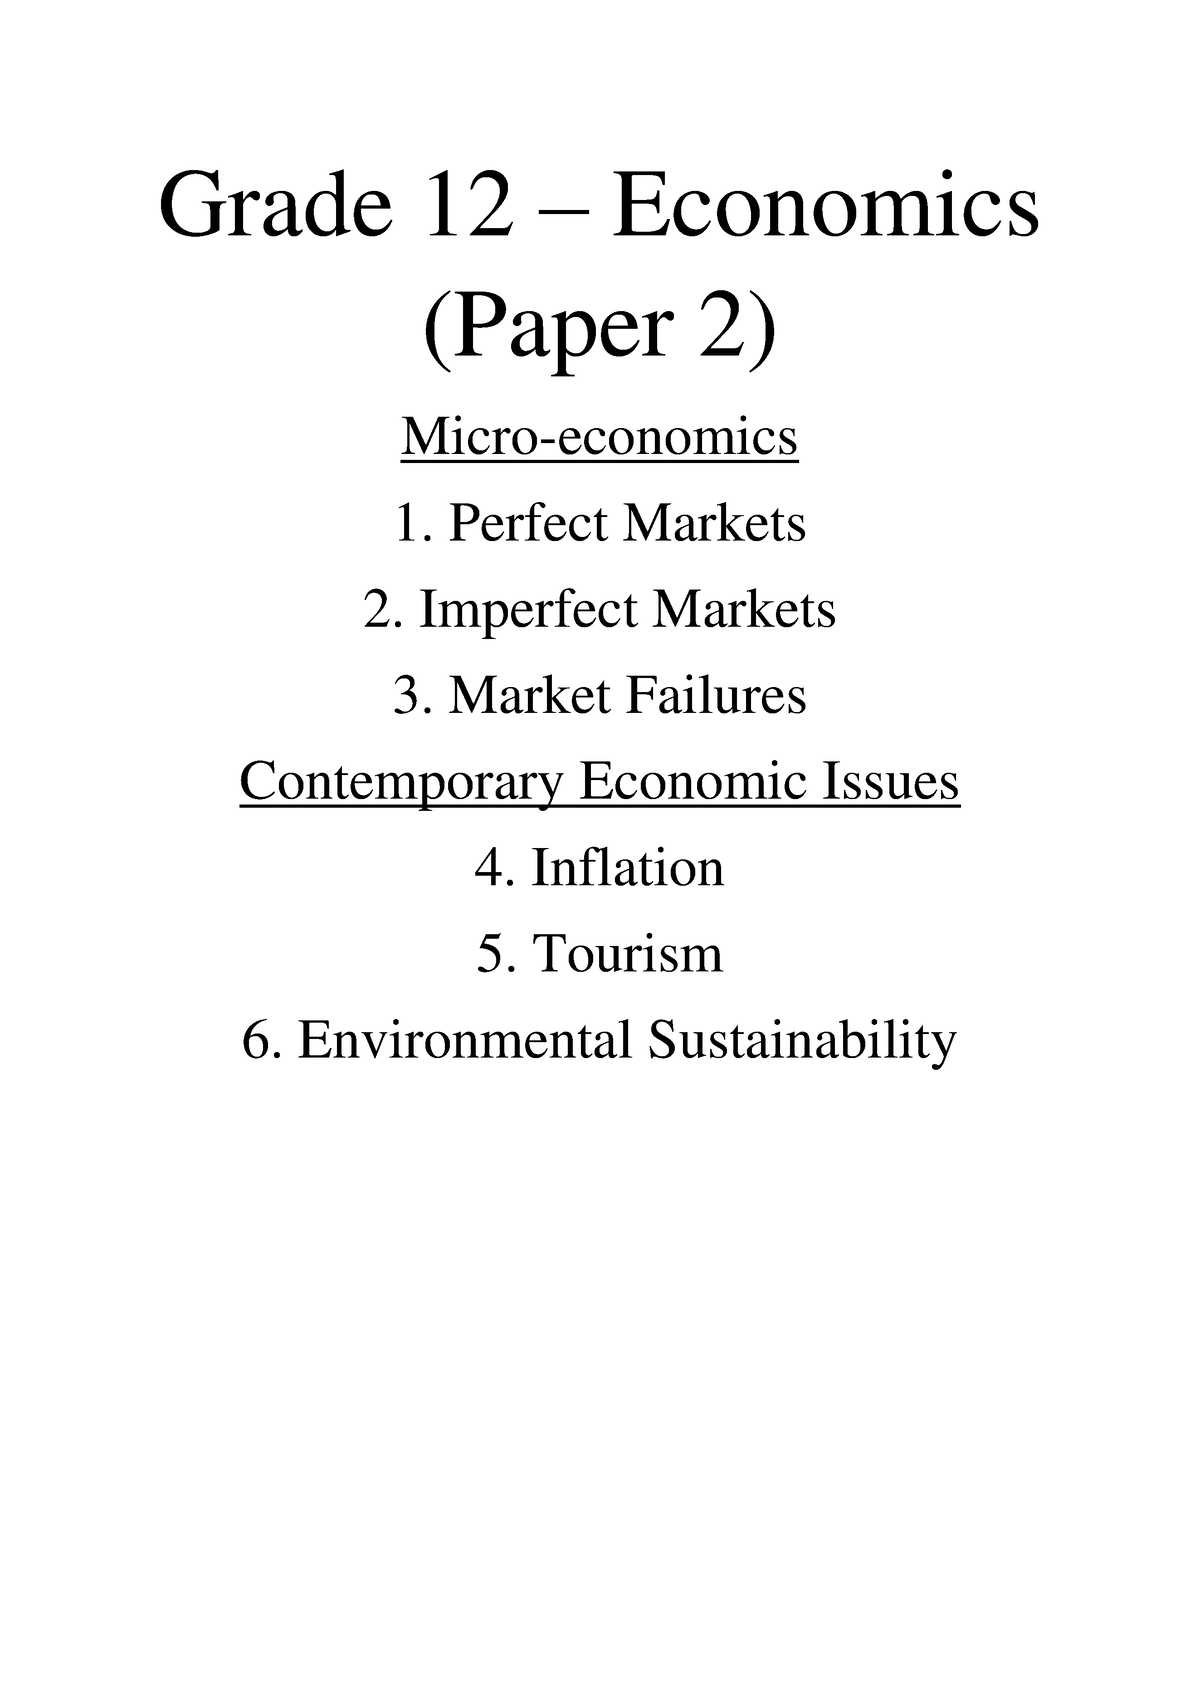 essays grade 12 economics